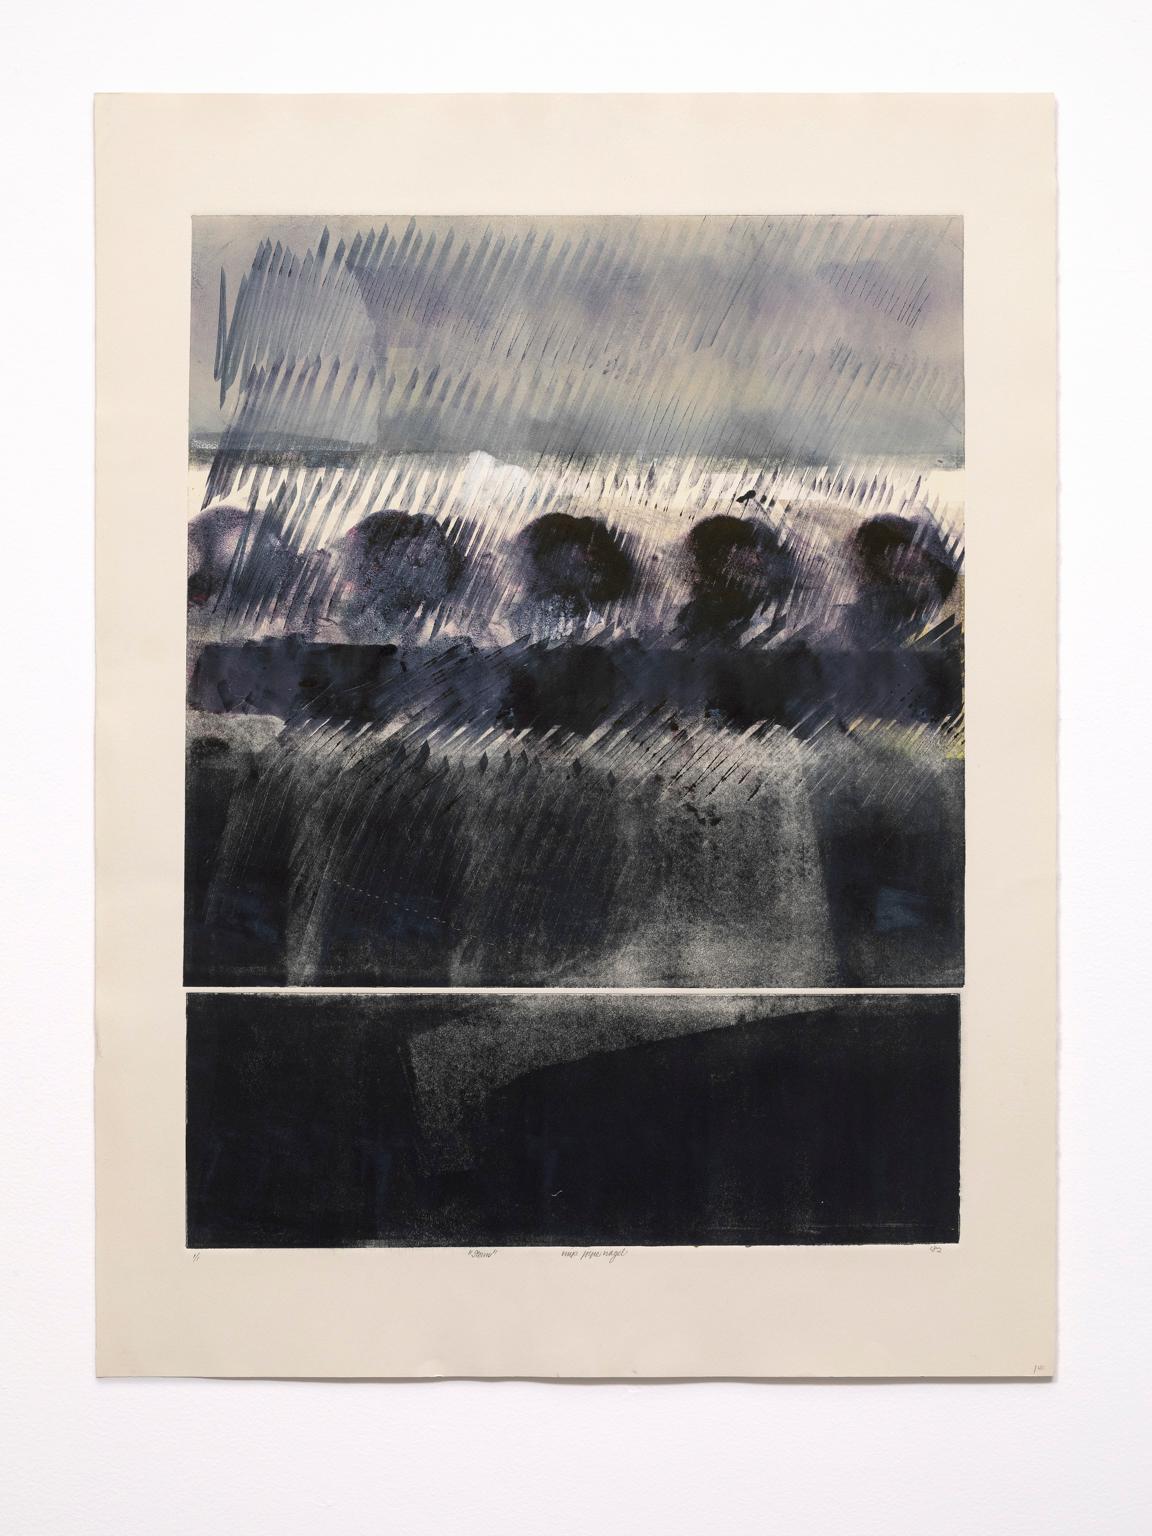 Joyce Tilley Nagel Landscape Print - Joyce T. Nagel Monoprint "Storm" Signed and Dated 